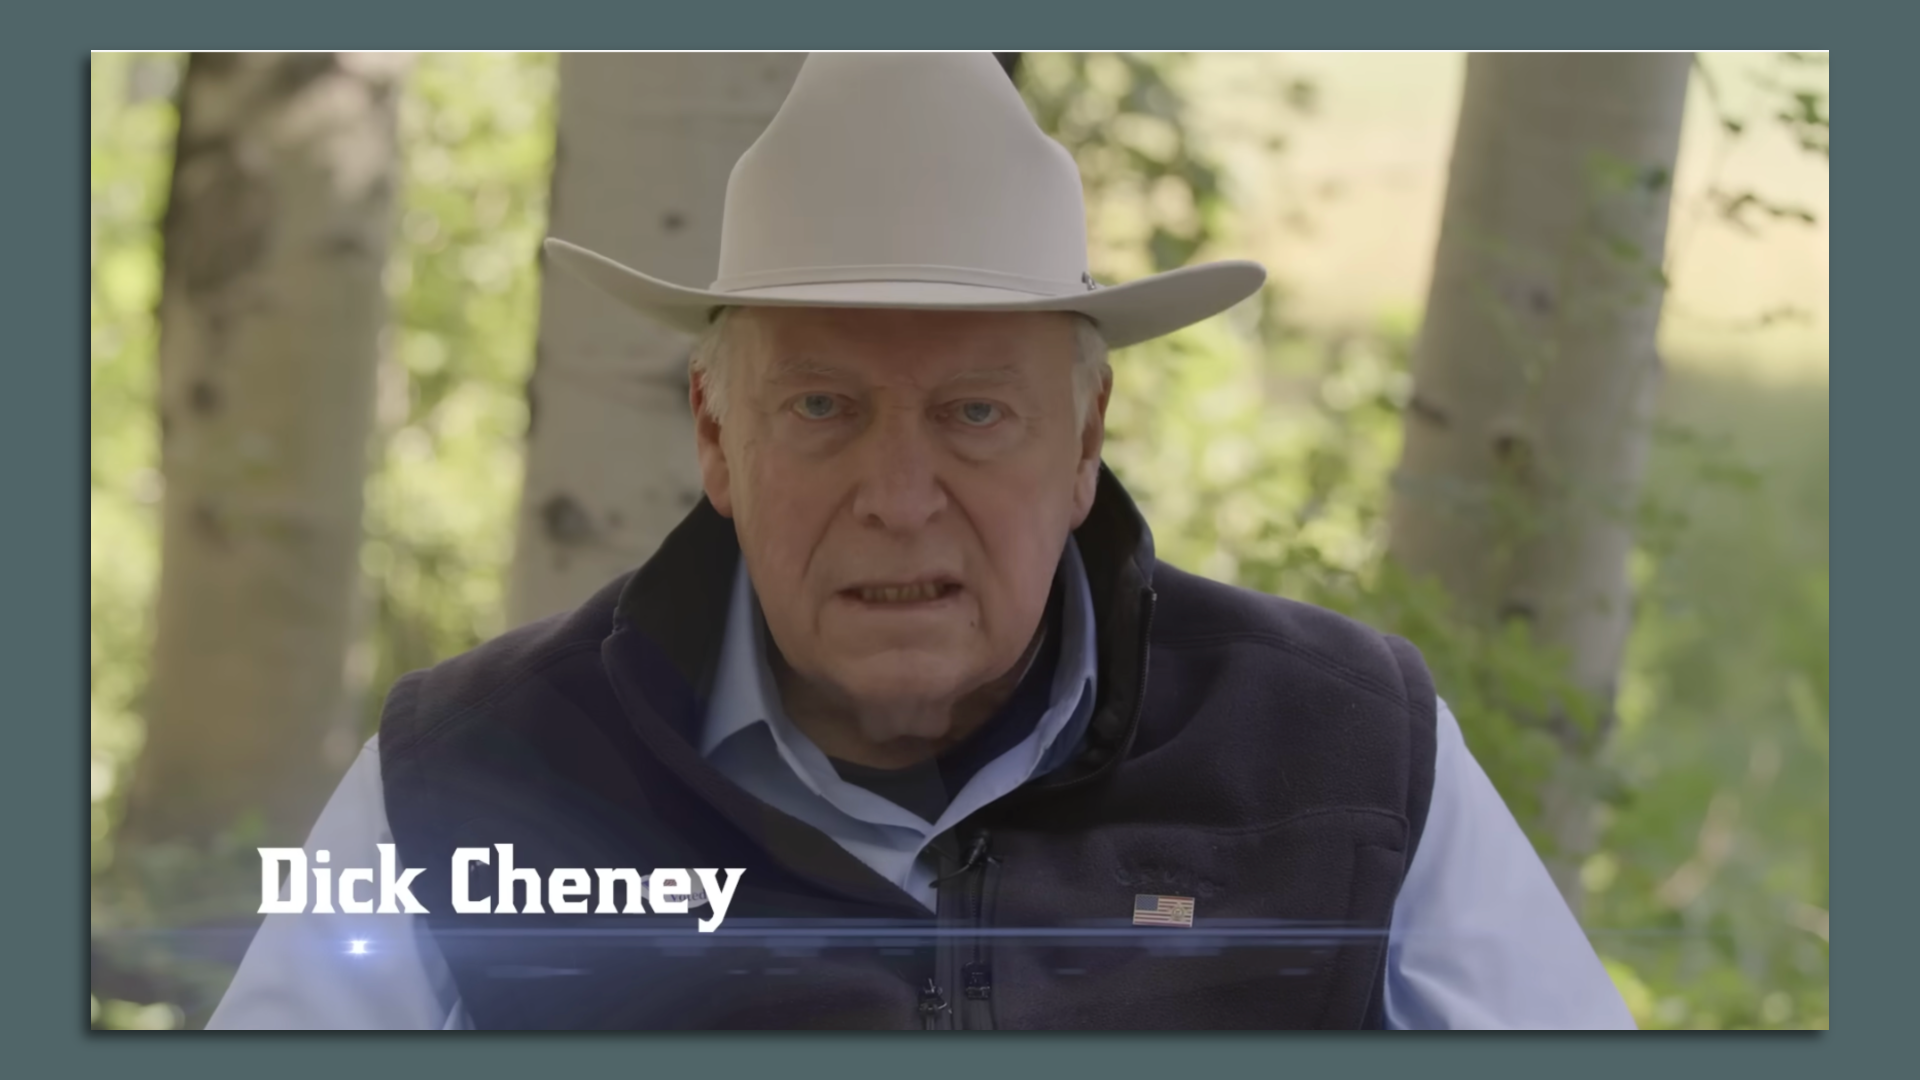 Screenshot of Dick Cheney in an ad via YouTube